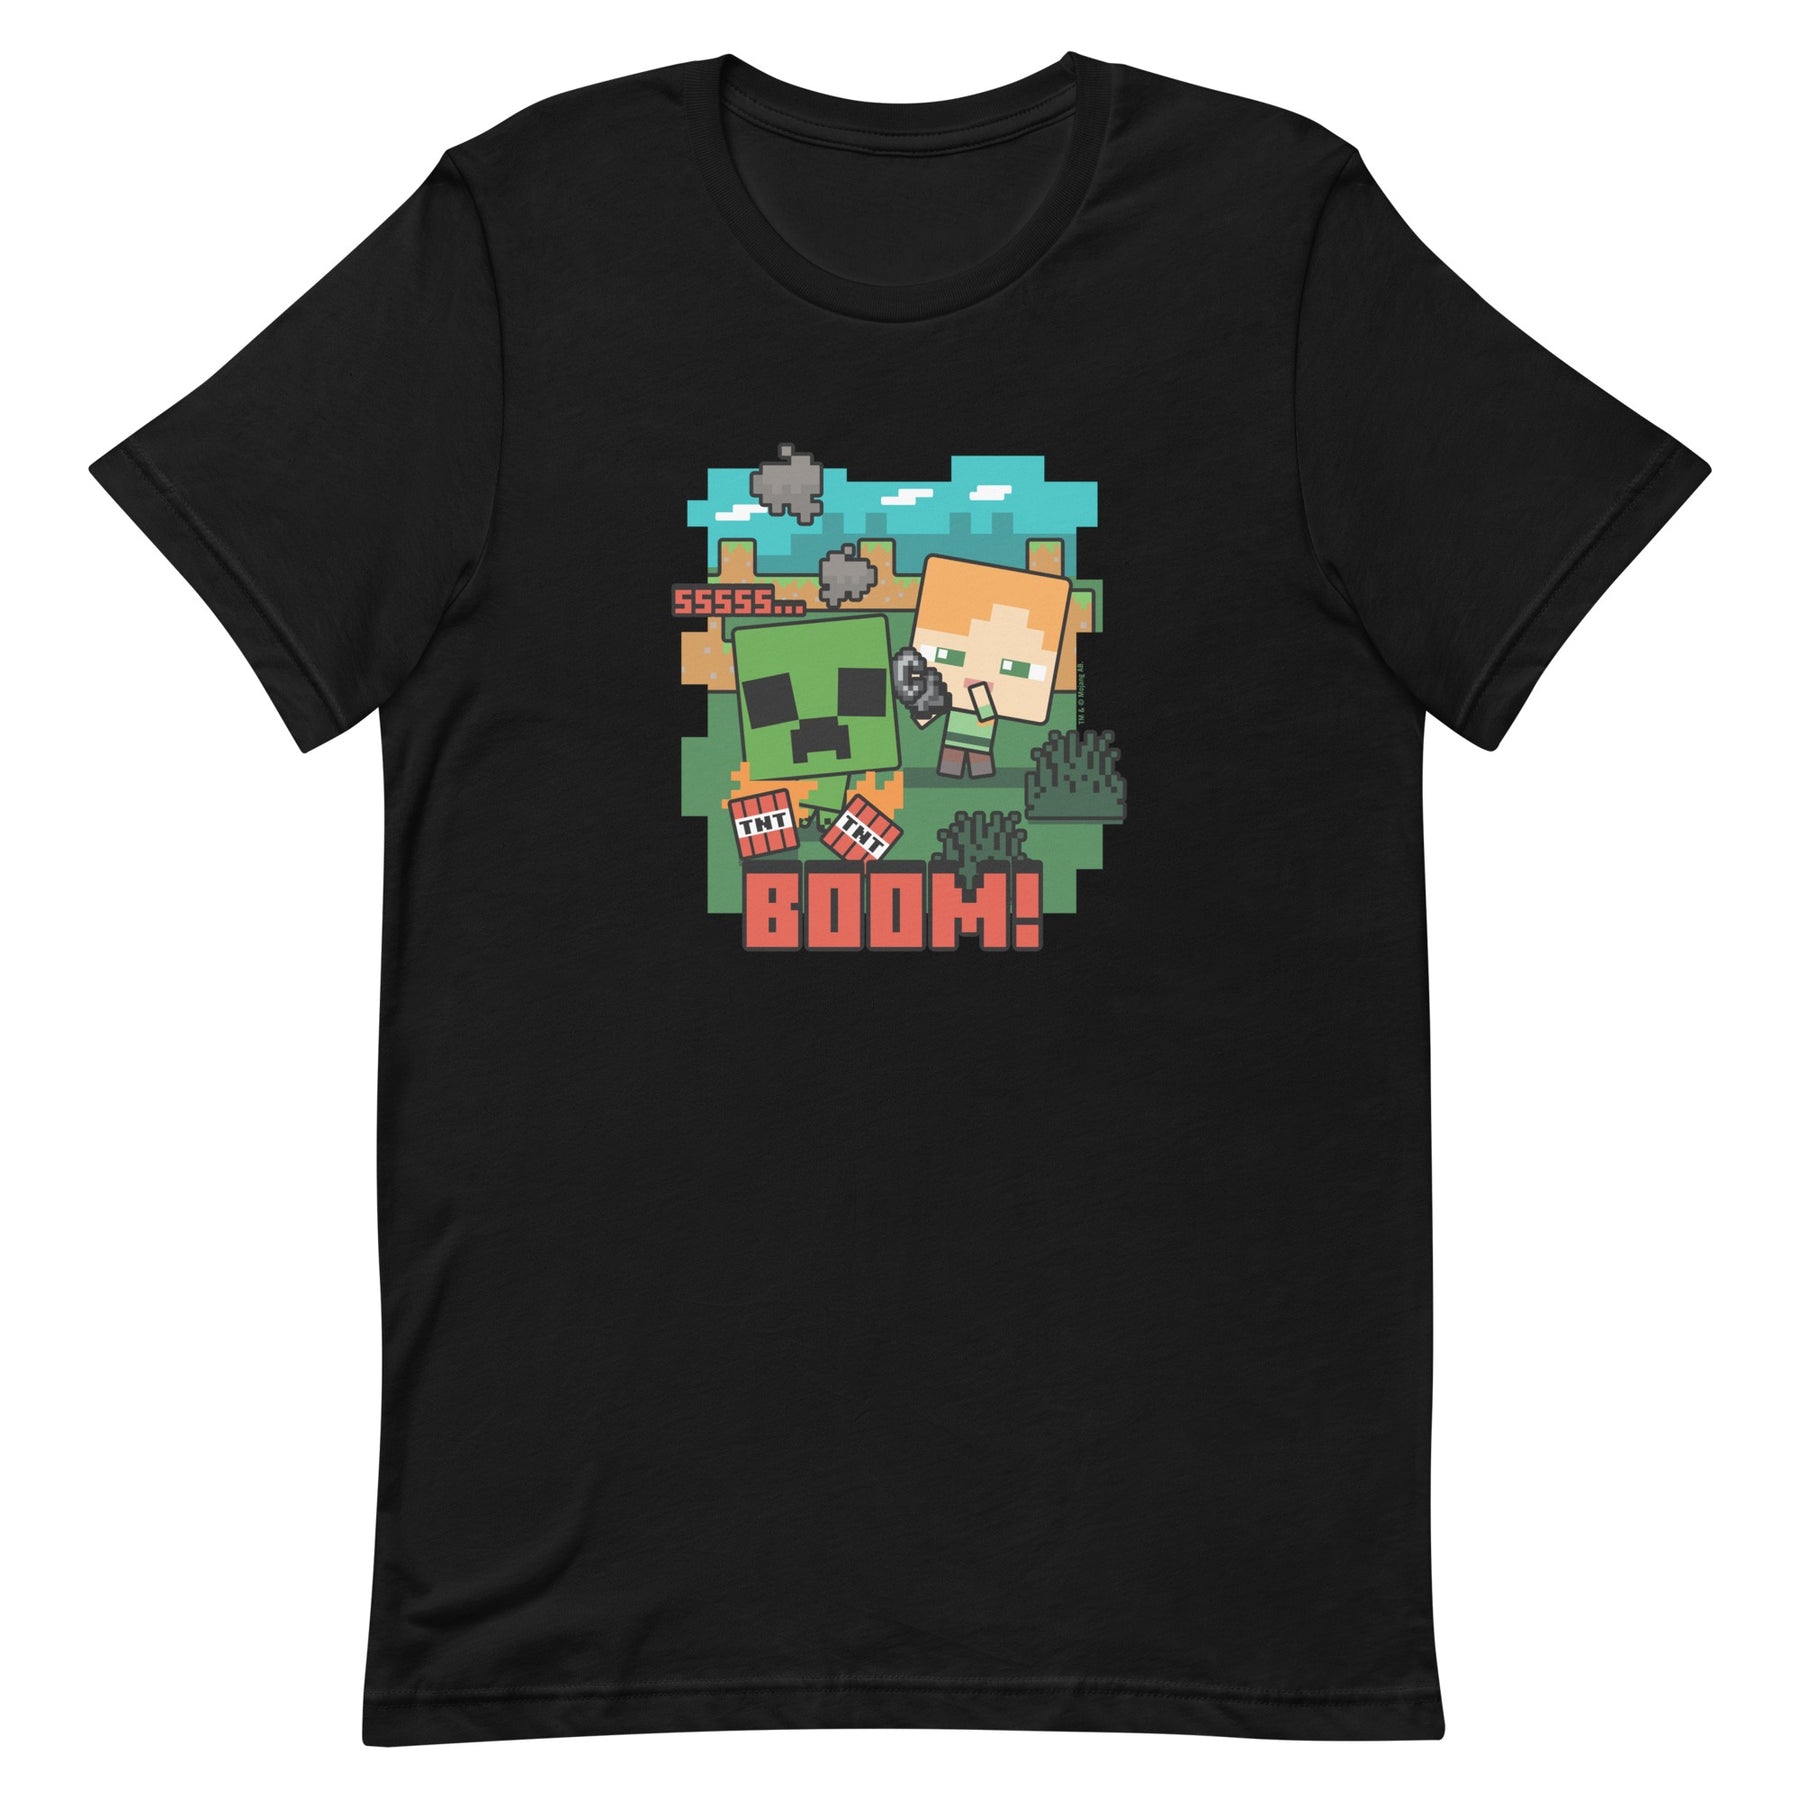 Minecraft T-Shirts & Hoodies, Official Minecraft Shop